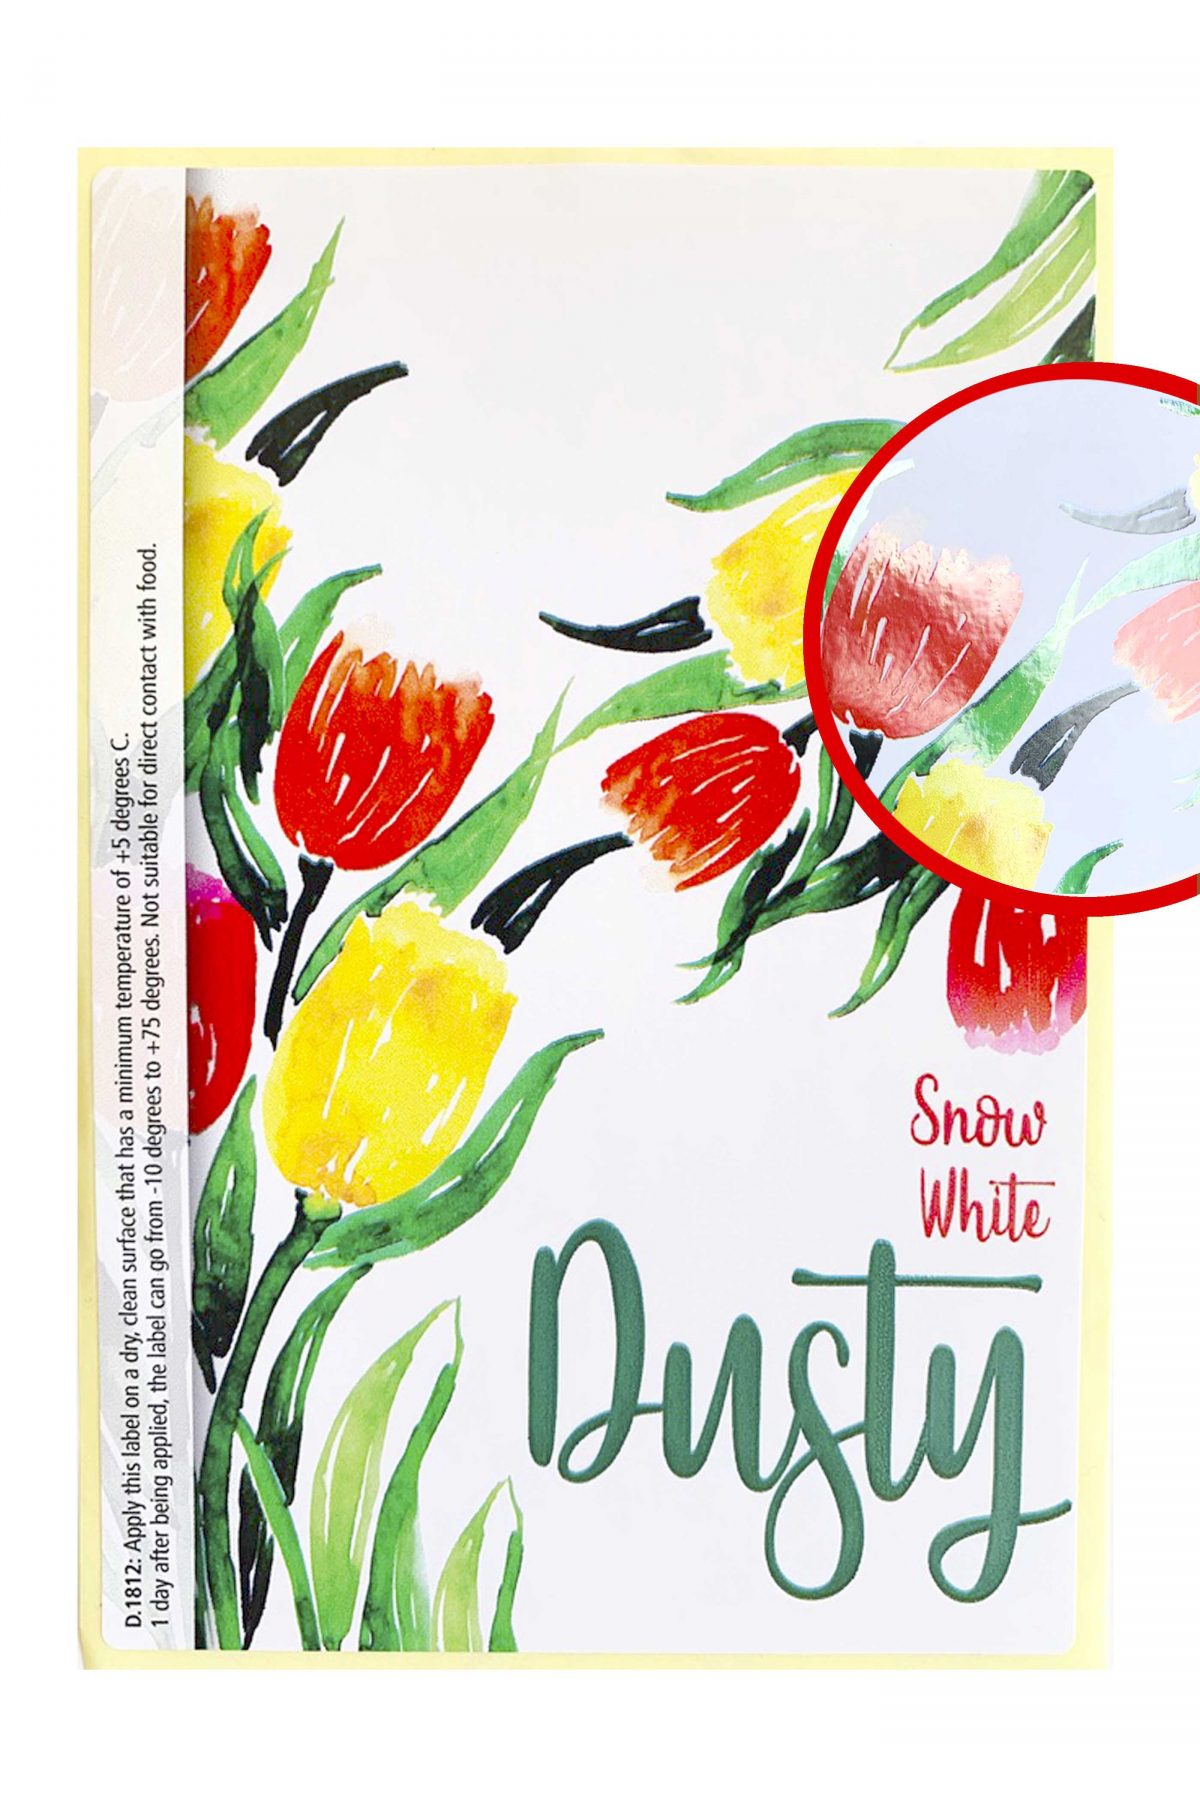 Label Dusty snow white